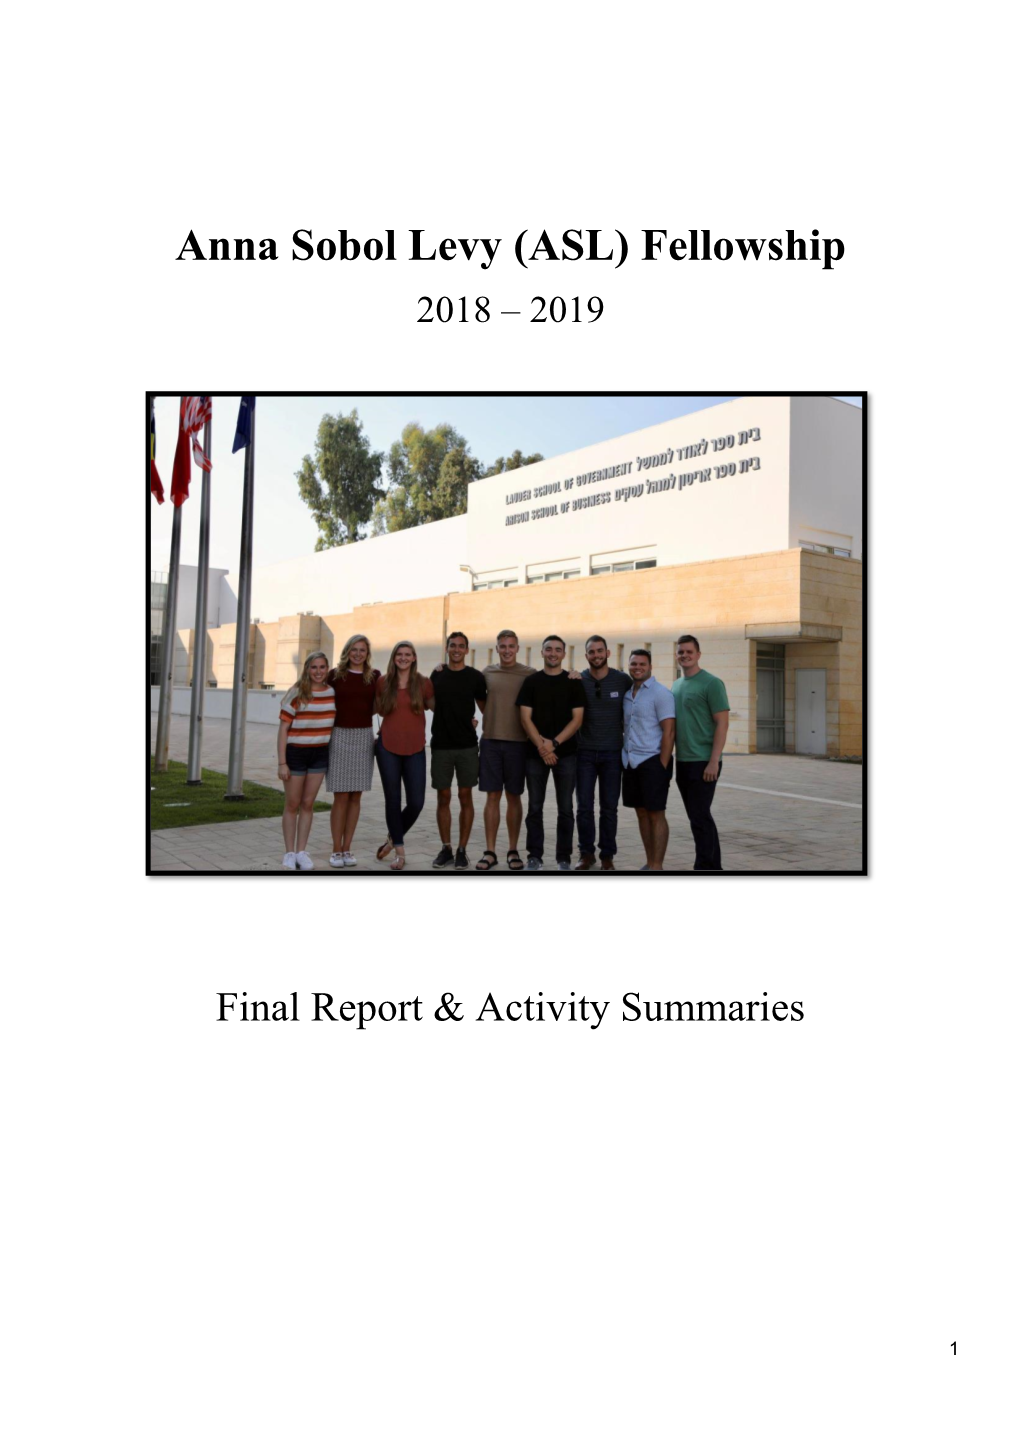 Anna Sobol Levy (ASL) Fellowship 2018 – 2019